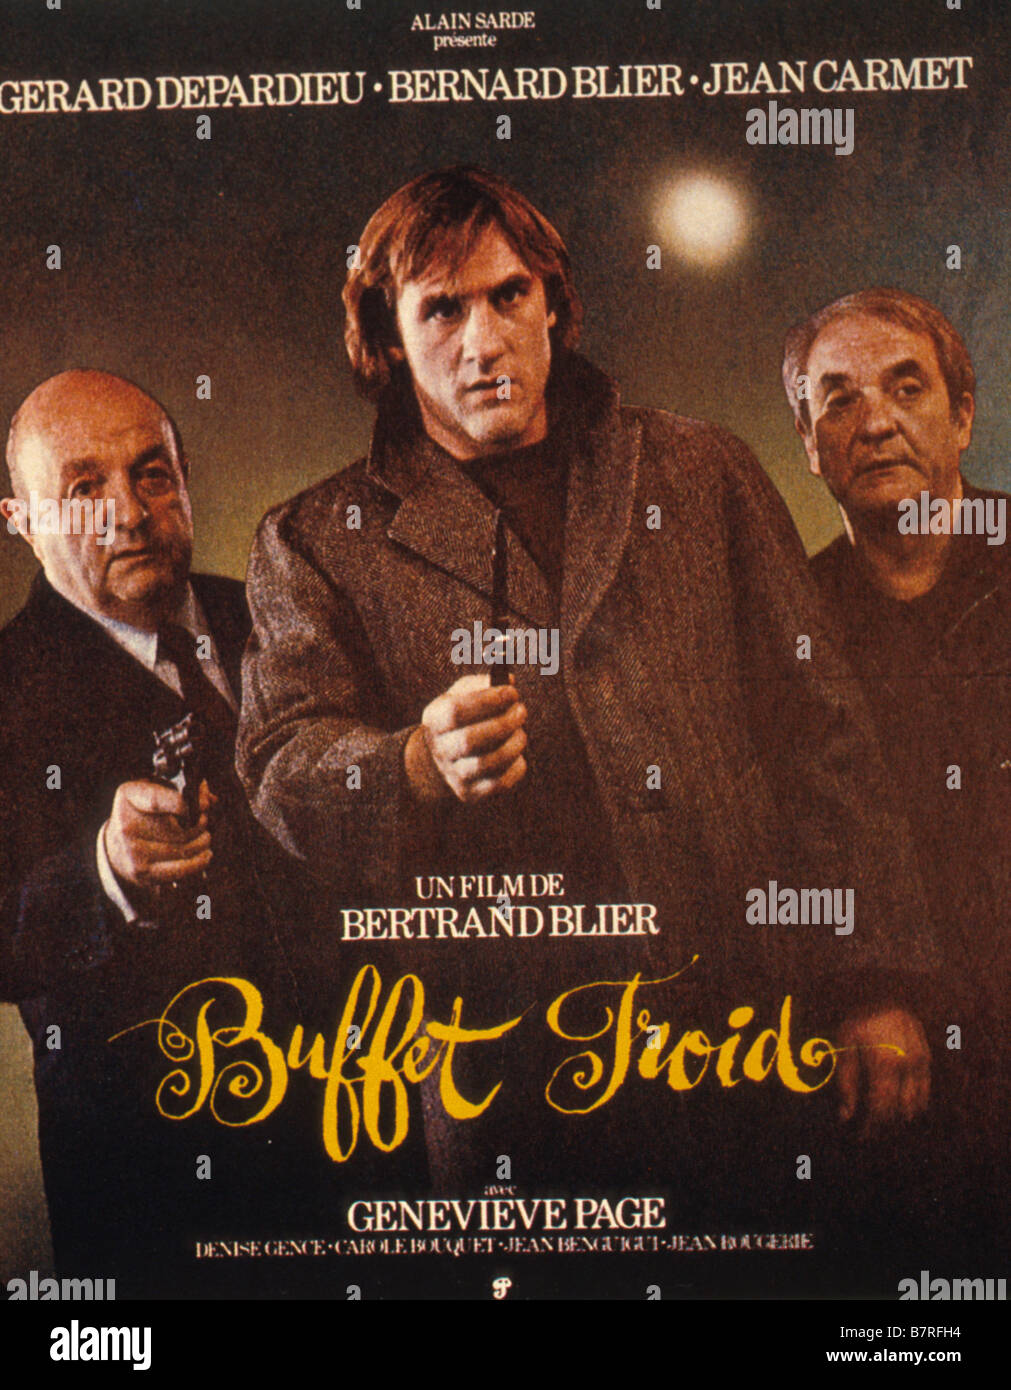 A Buffet froid Salumi Anno: 1979 - FRANCIA DIRETTORE: Bertrand Blier Bernard Blier, Gérard Depardieu, Jean O. Carmet poster (Fr) Foto Stock